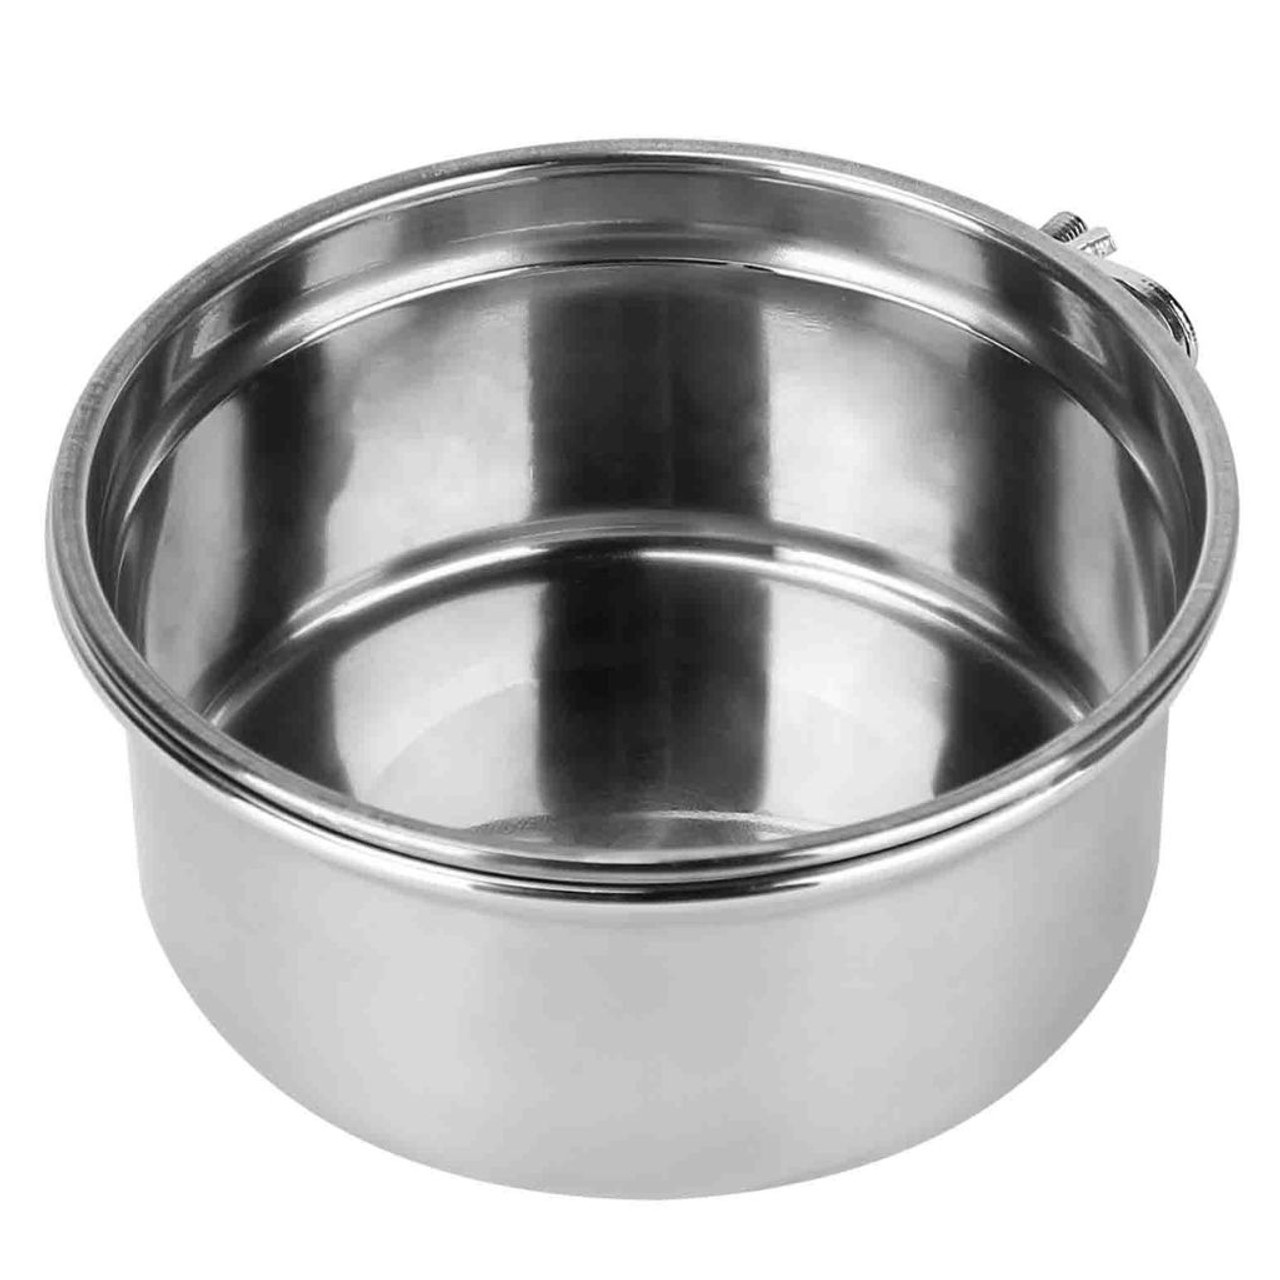 iMounTEK® Stainless Steel Pet Bowl product image